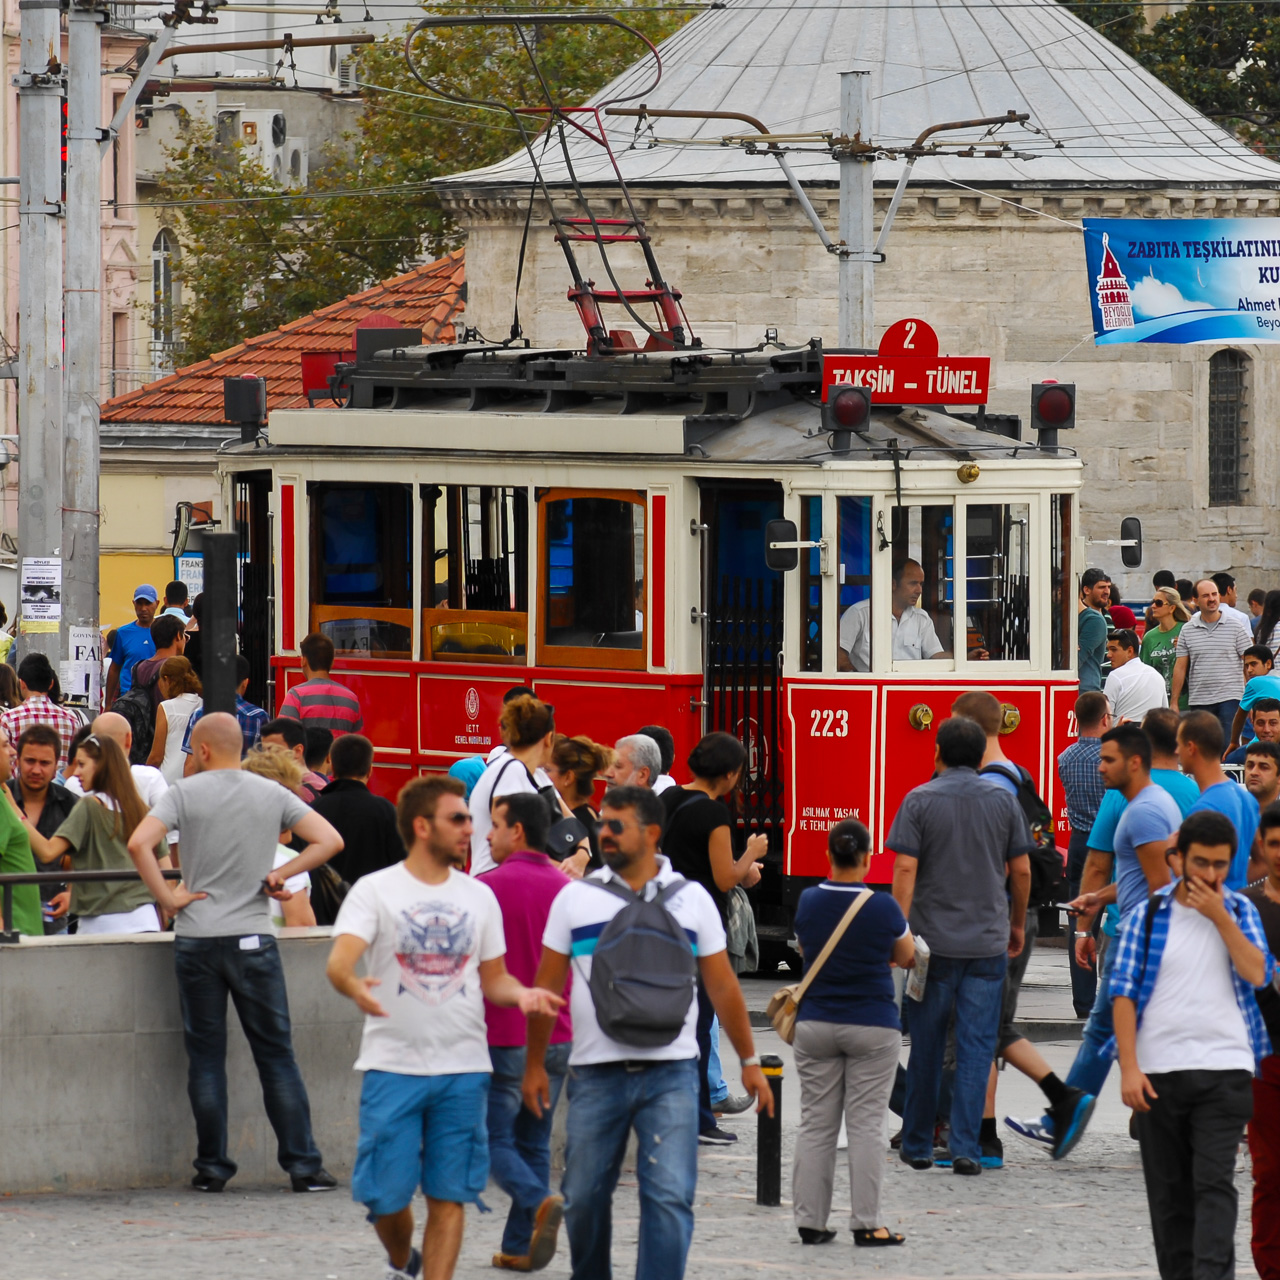 Taksim Square to Tünel